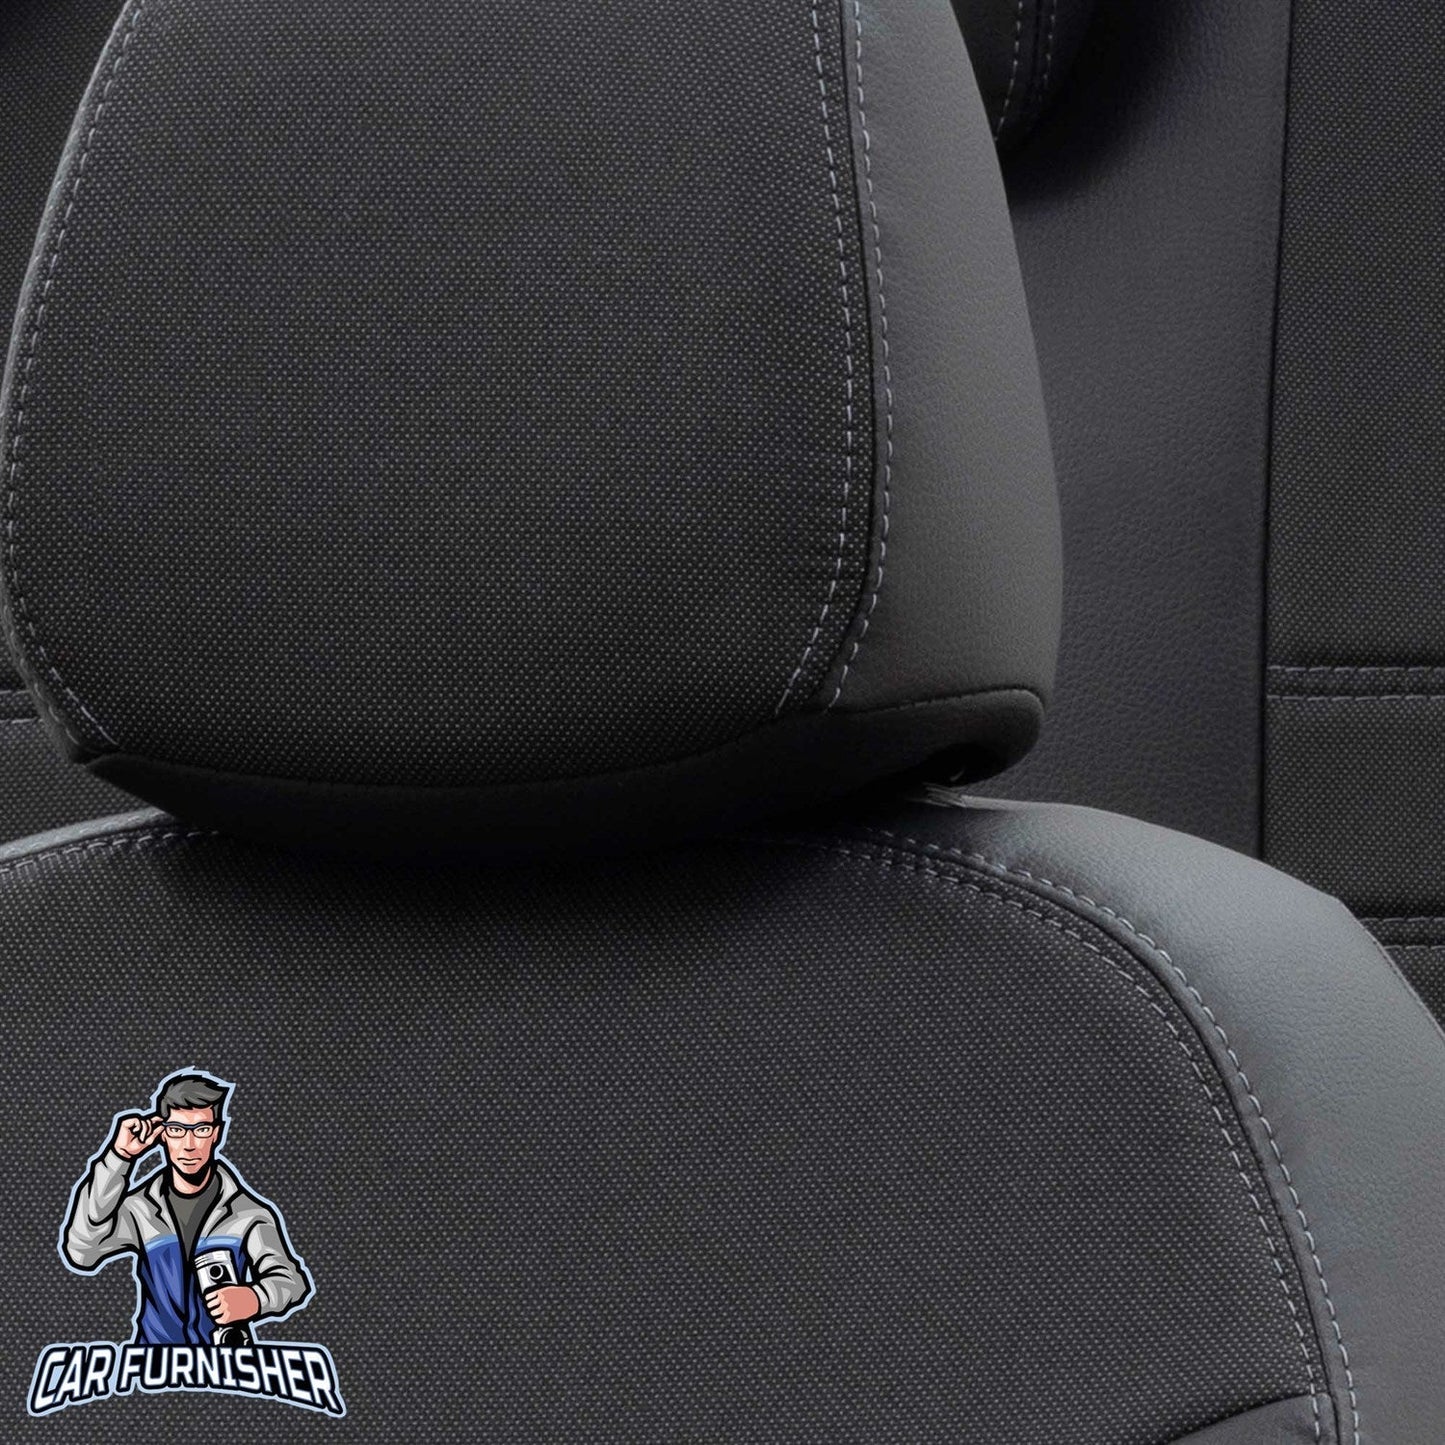 Toyota Carina Seat Cover Paris Leather & Jacquard Design Black Leather & Jacquard Fabric